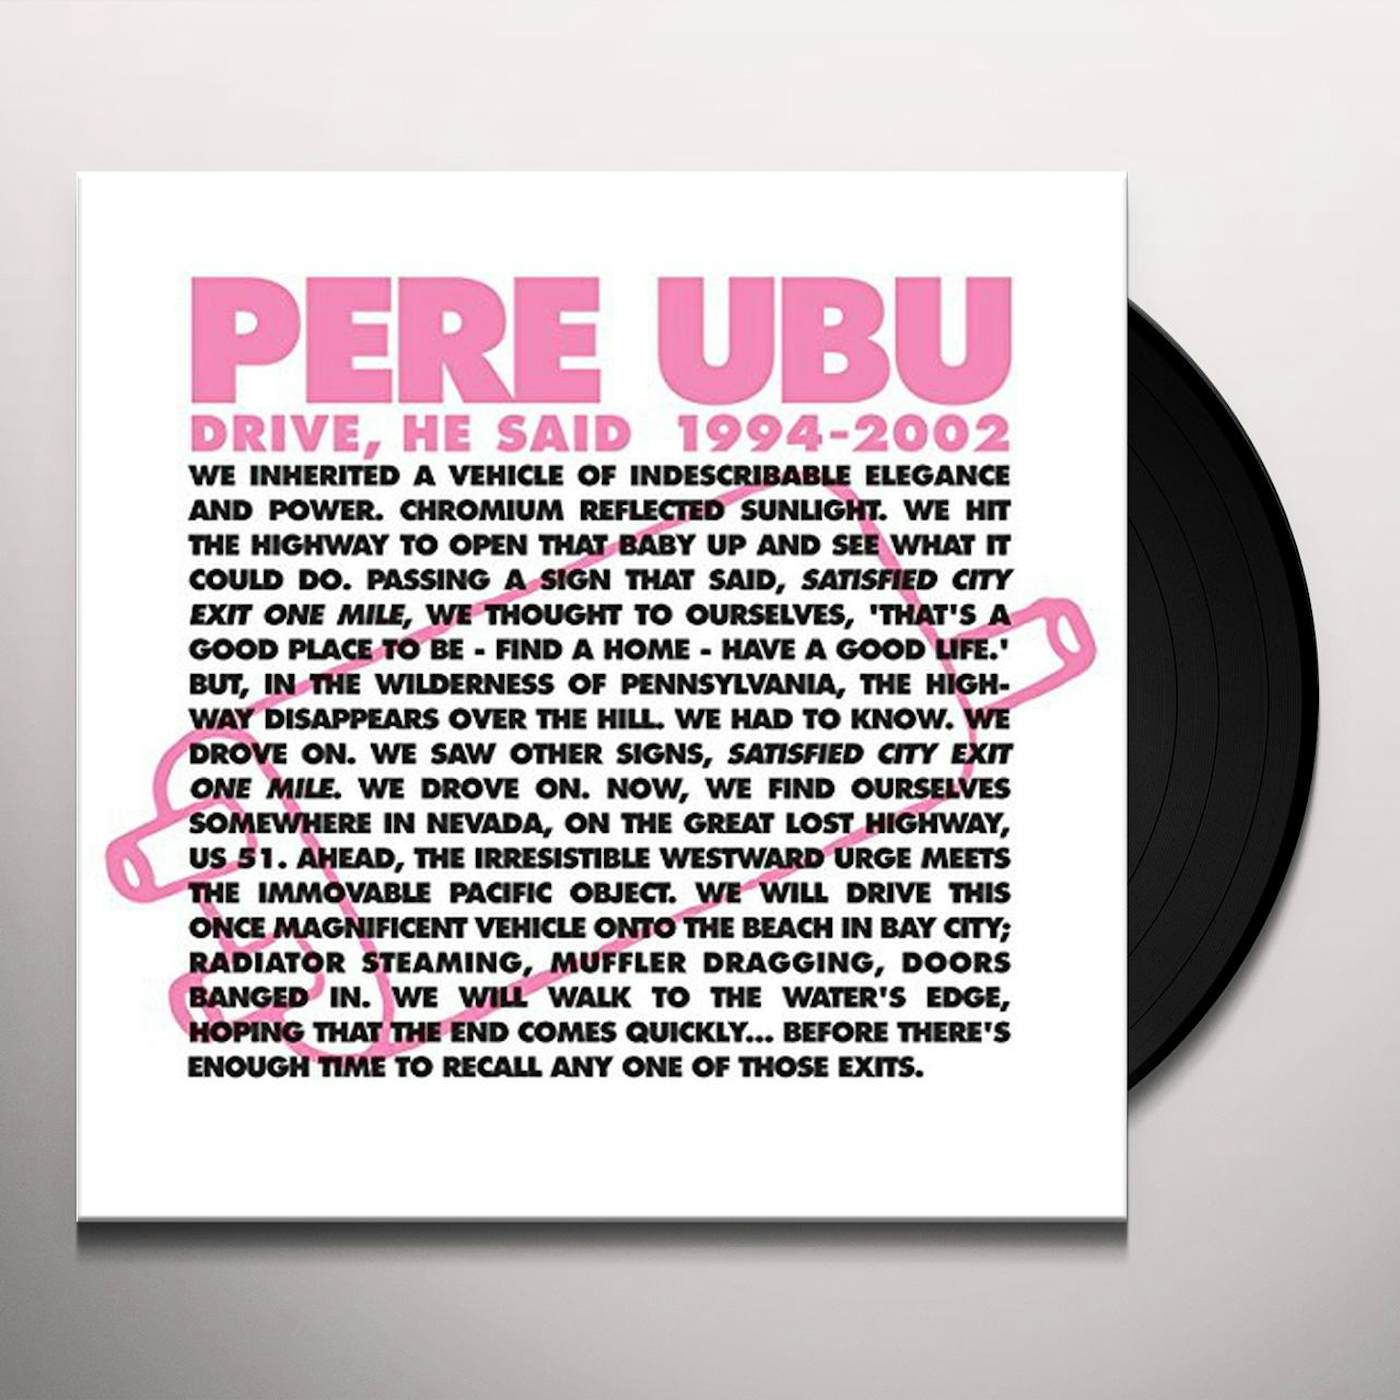 Pere Ubu DRIVE HE SAID 1994-2002 Vinyl Record